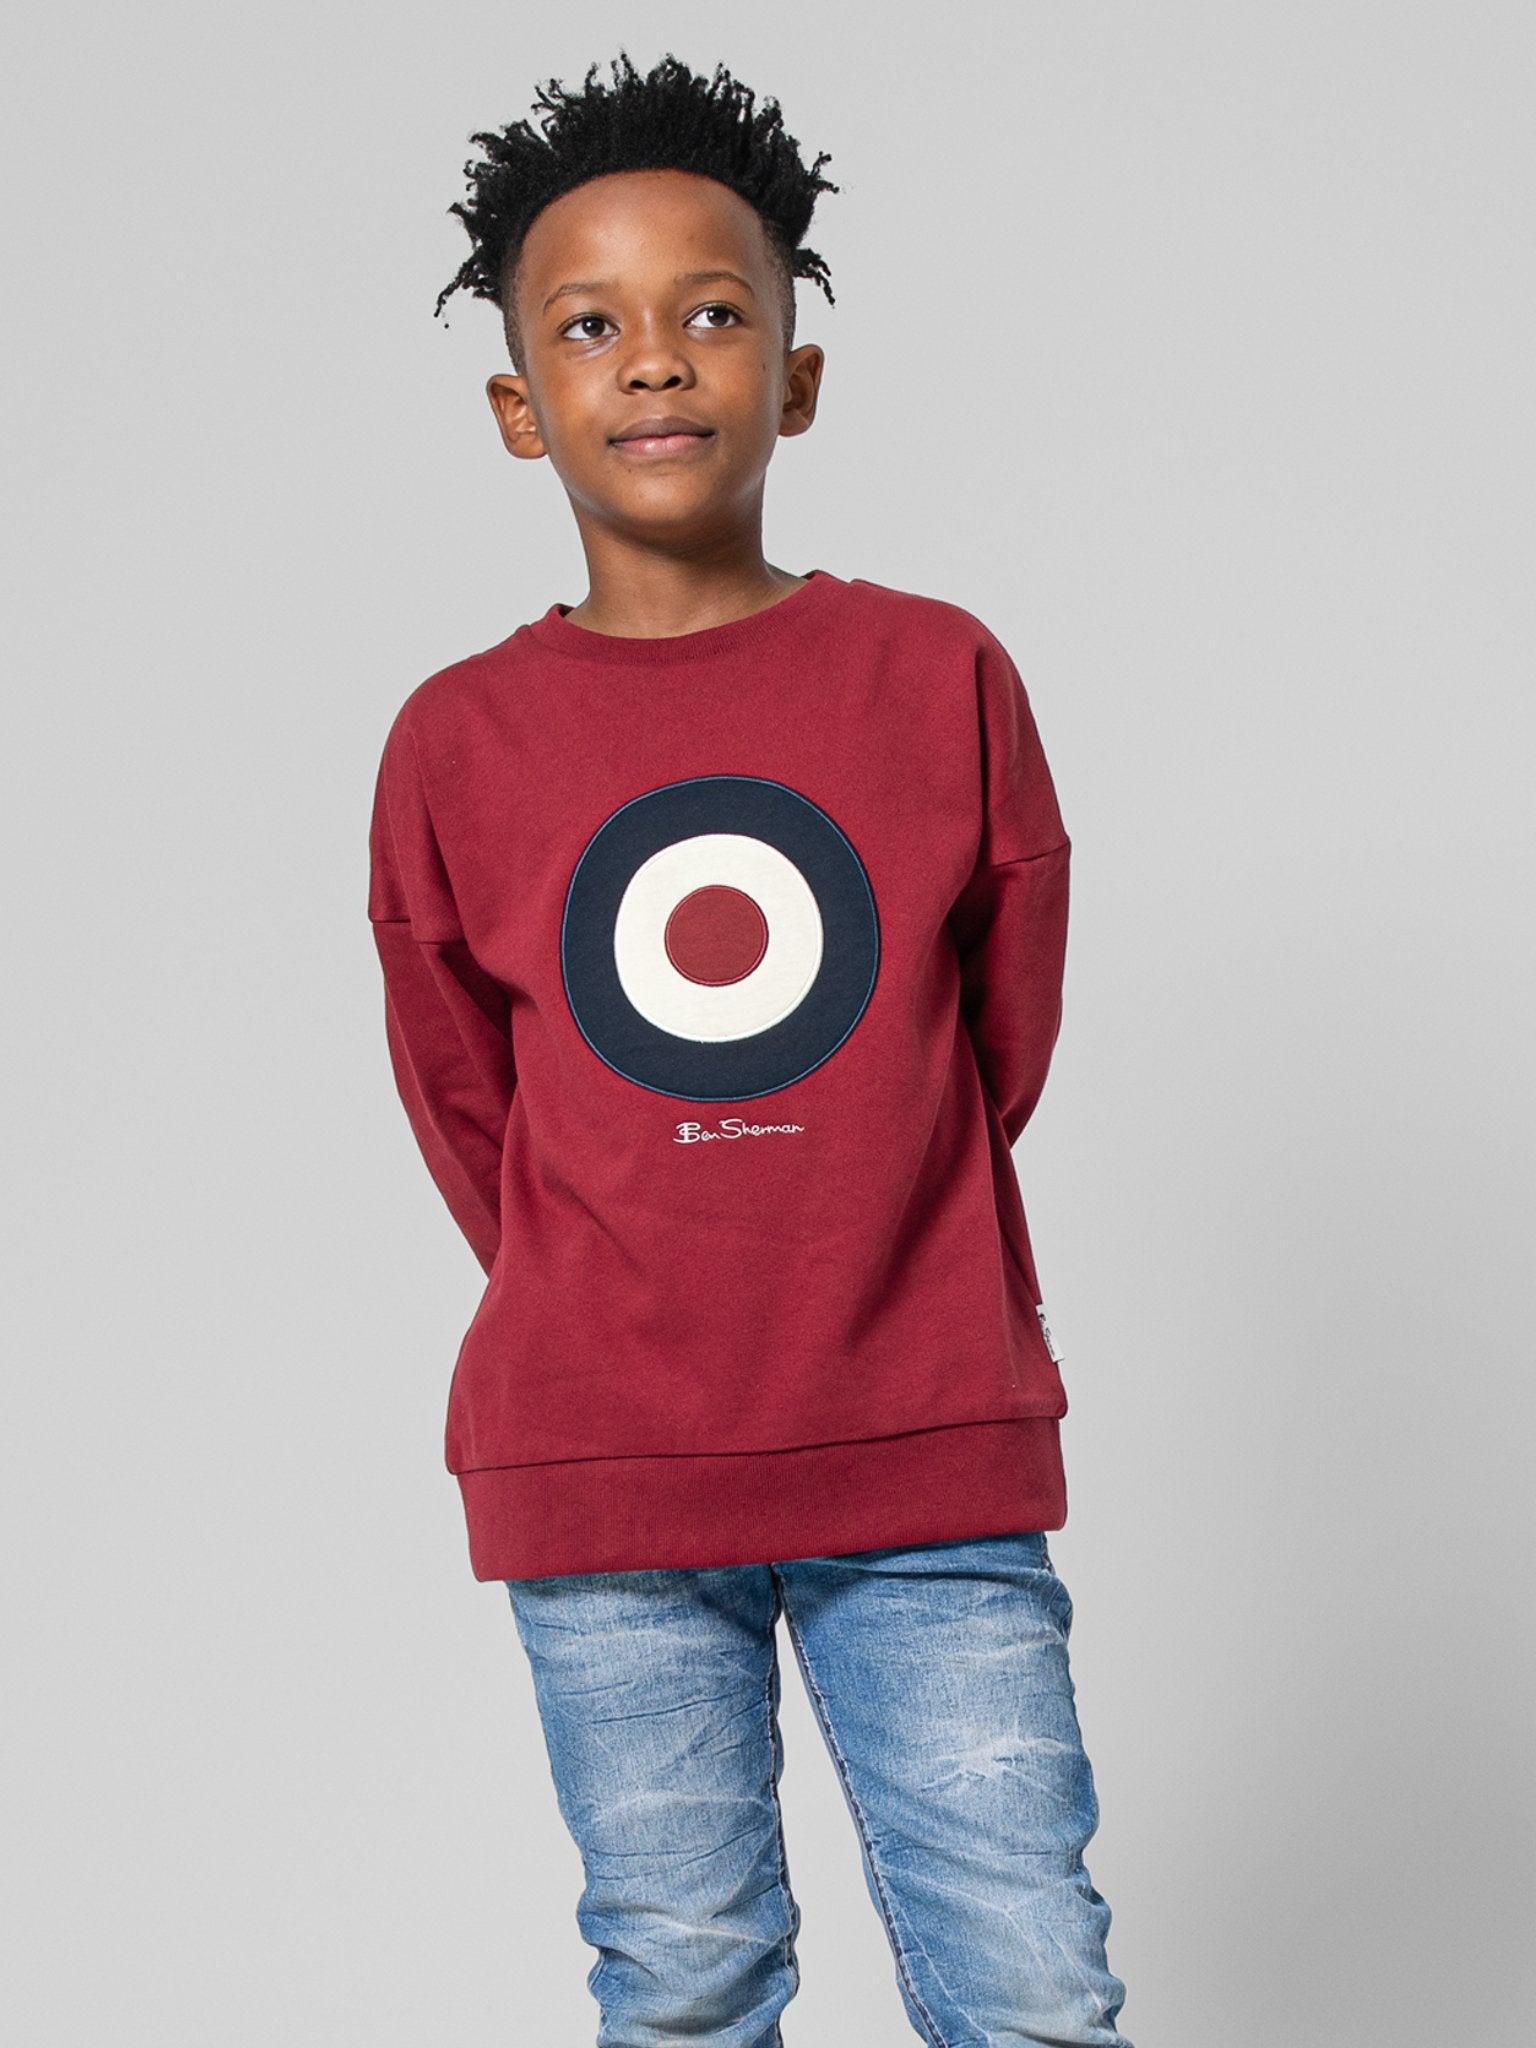 Kids Target Crew Sweater - Berry